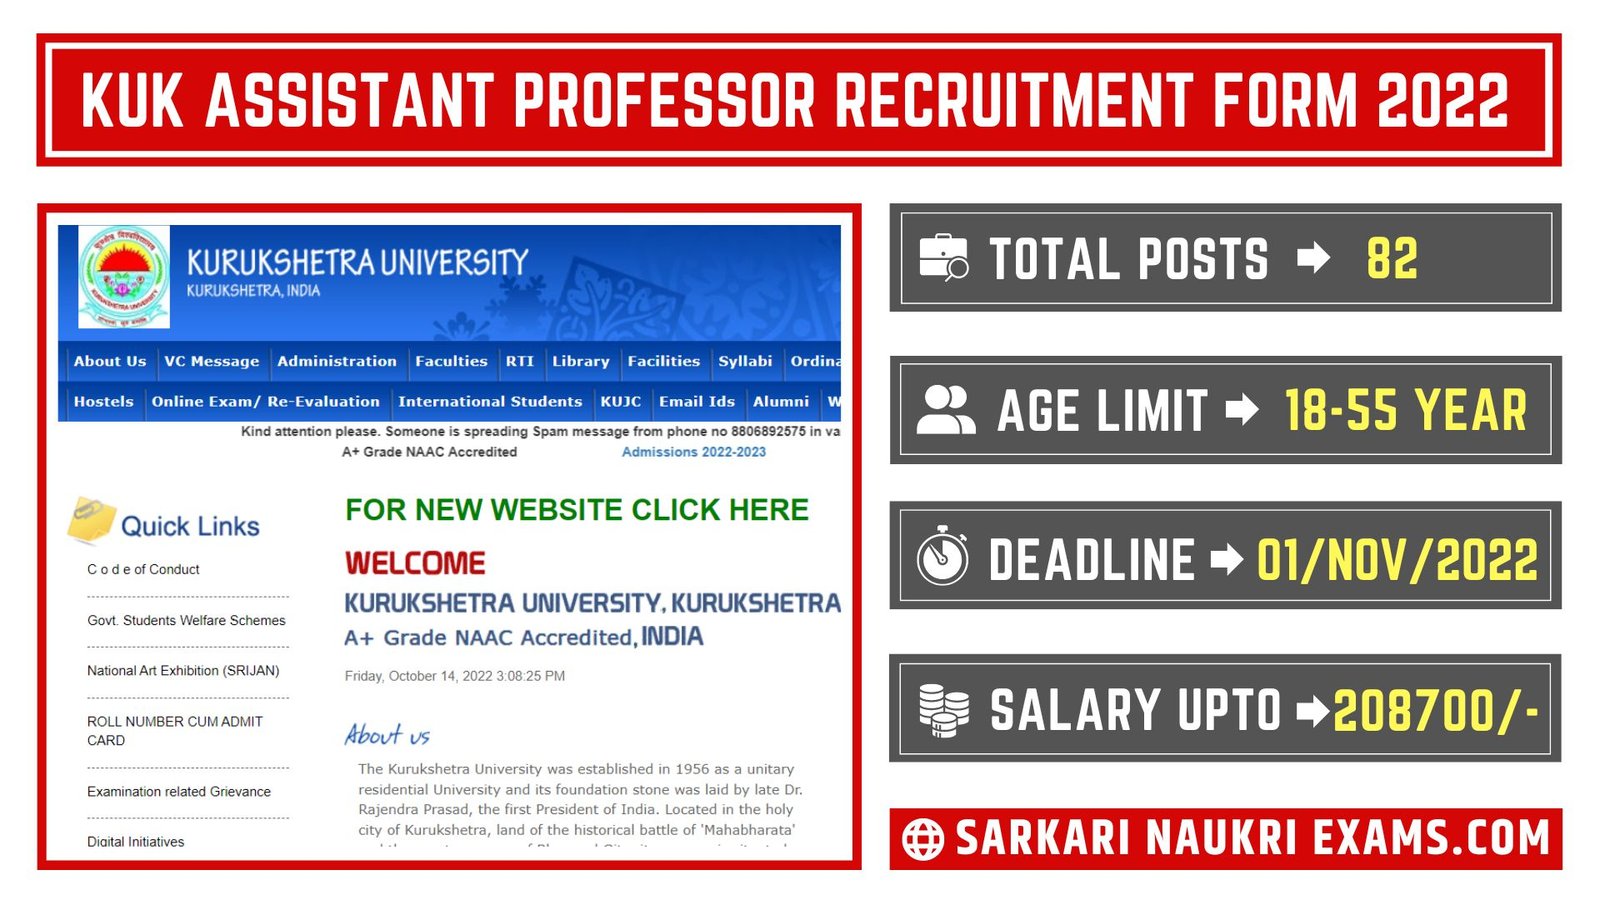 Kurukshetra University (KUK) Assistant Professor Recruitment Form 2022 | Interview Based Job